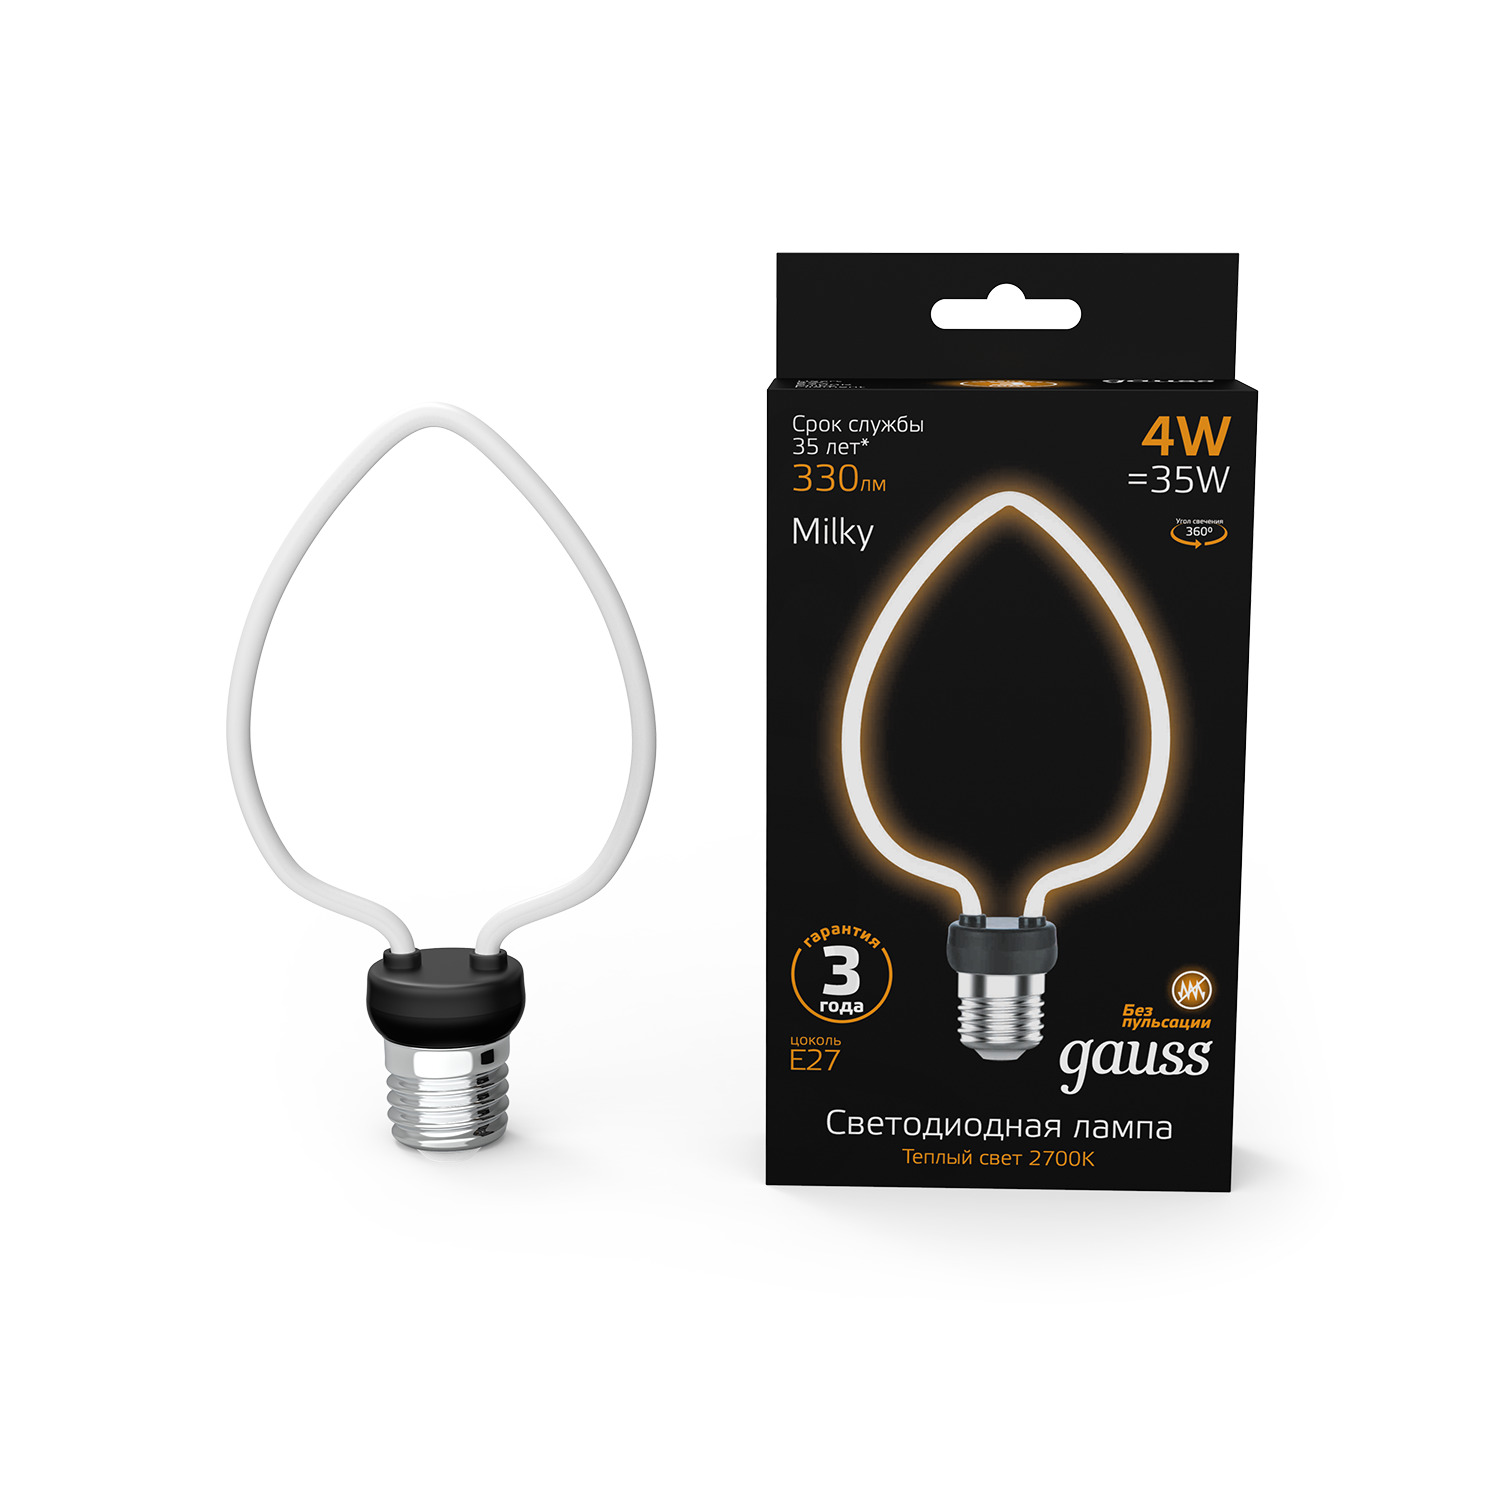 Лампа Gauss Filament Artline Heart 4W 330lm 2700К Е27 milky LED 1/10/100 лампа gauss filament artline g95 4w 330lm 2700к е27 milky led 1 10 100